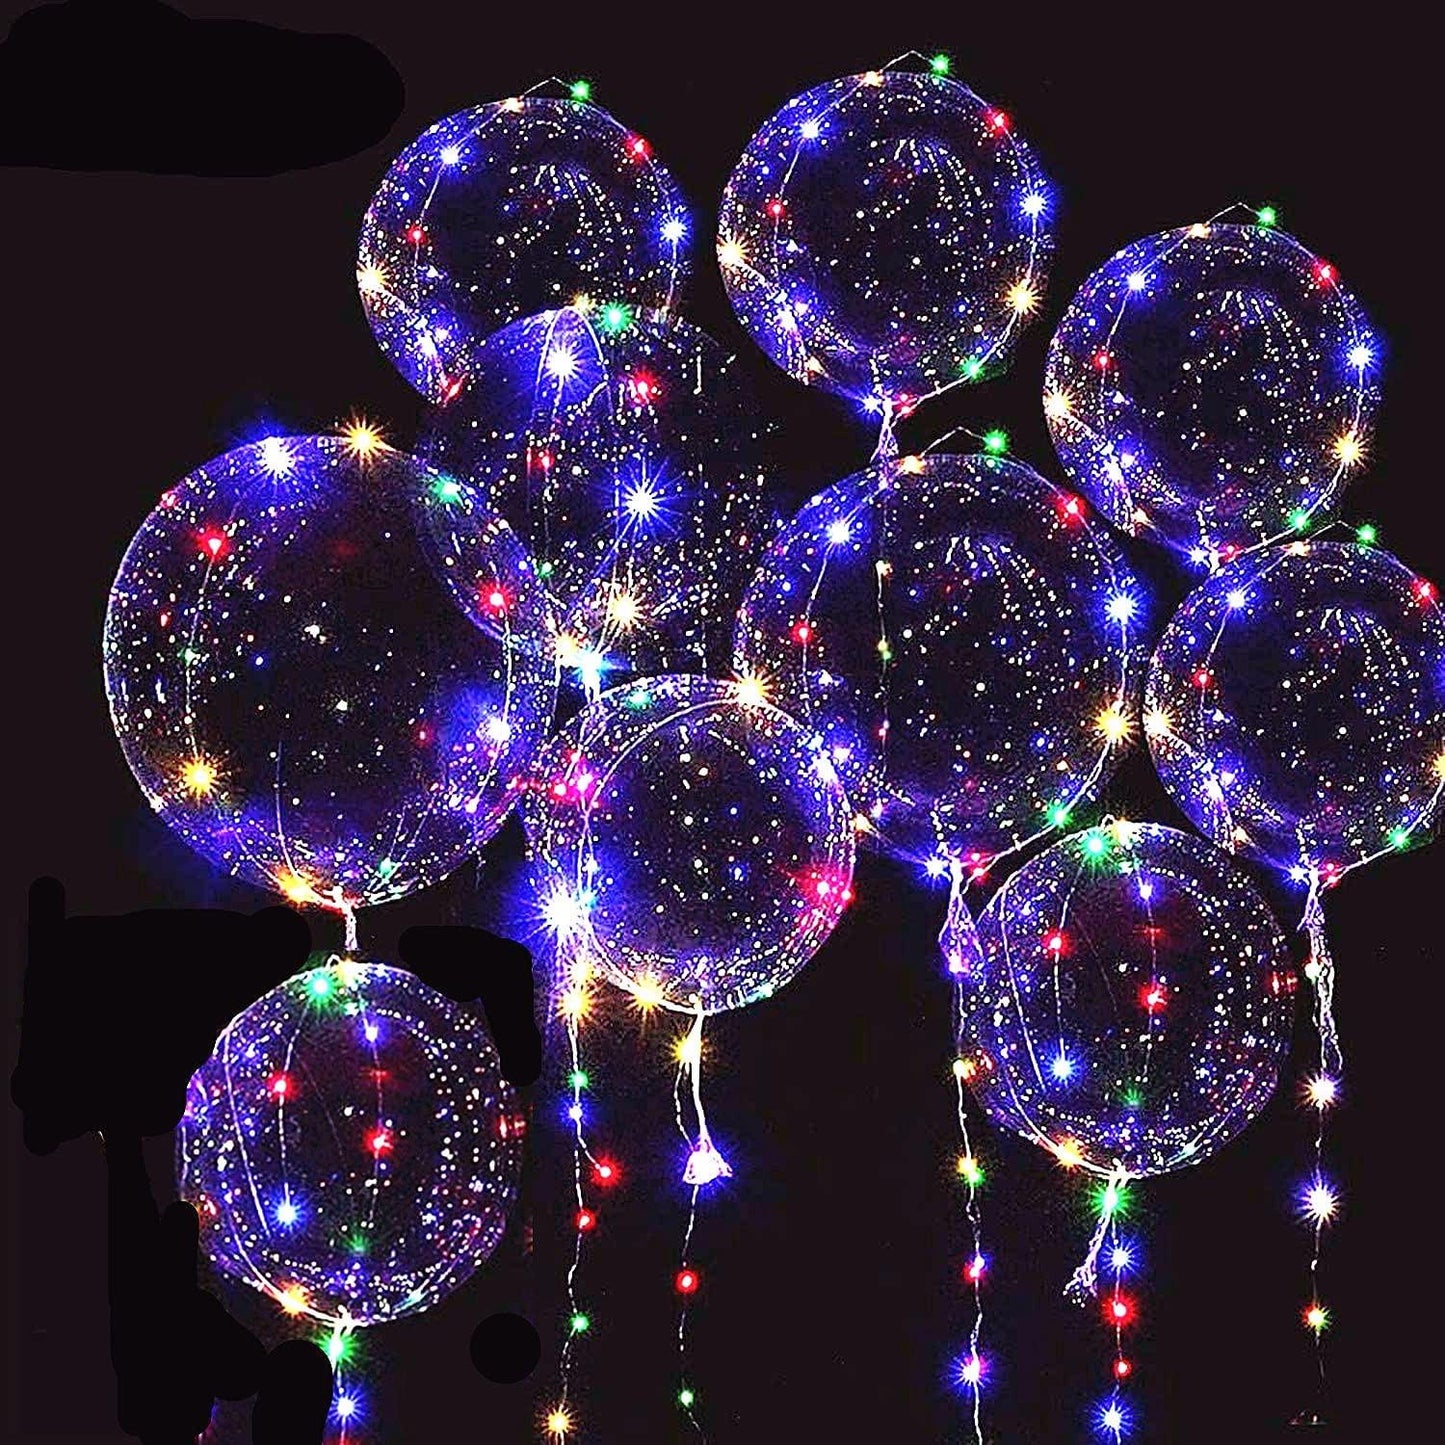 Multicolor Reusable Bobo Balloons for Birthday Wedding Decorations - If you say i do